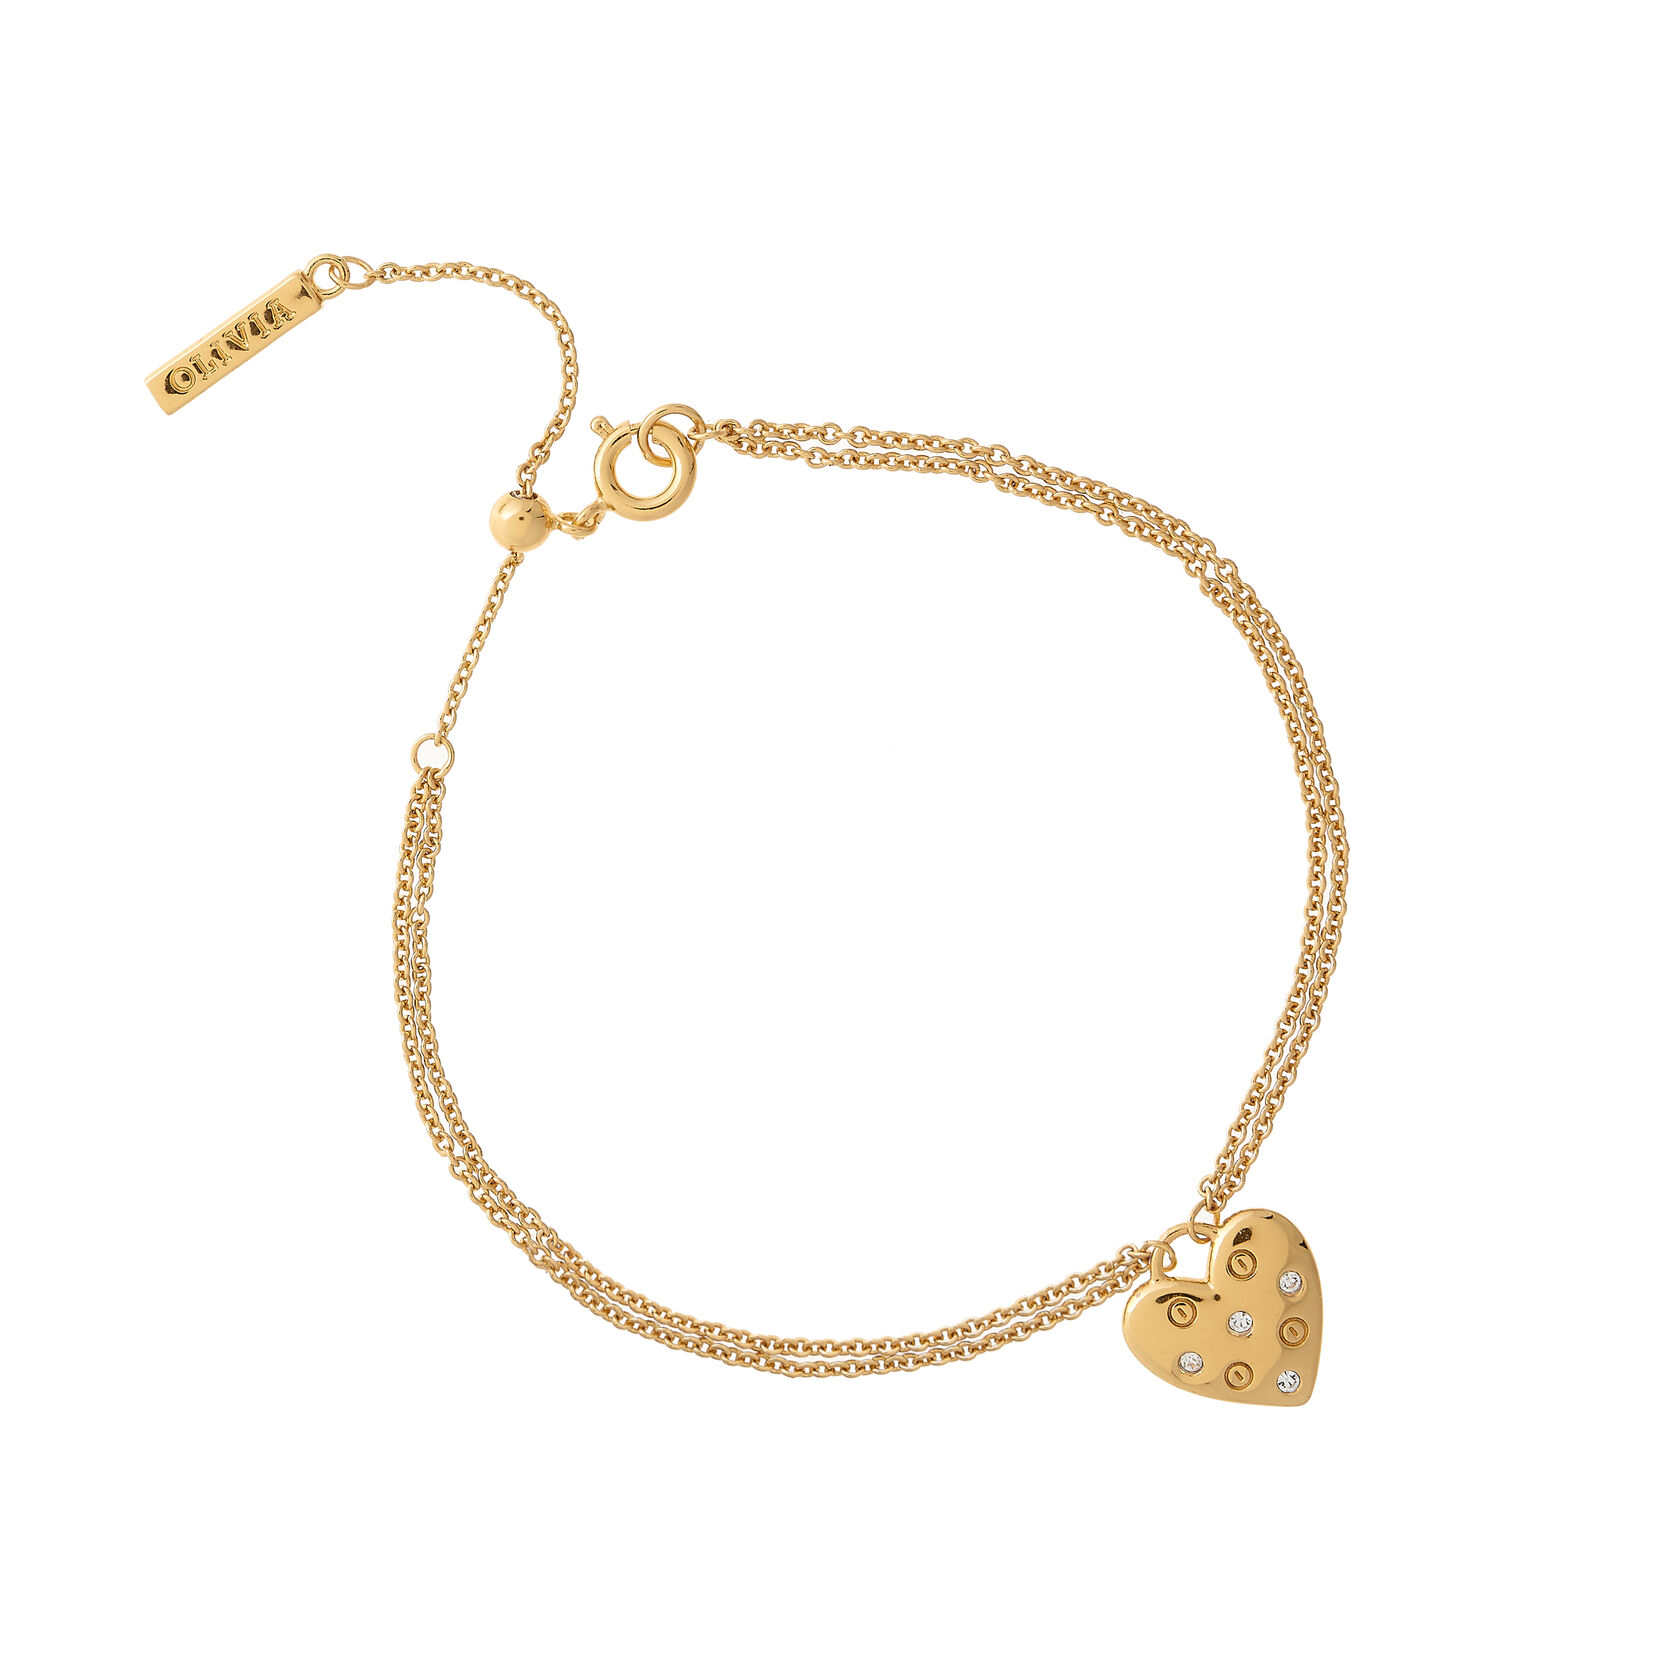 Classic Heart Gold Bracelet